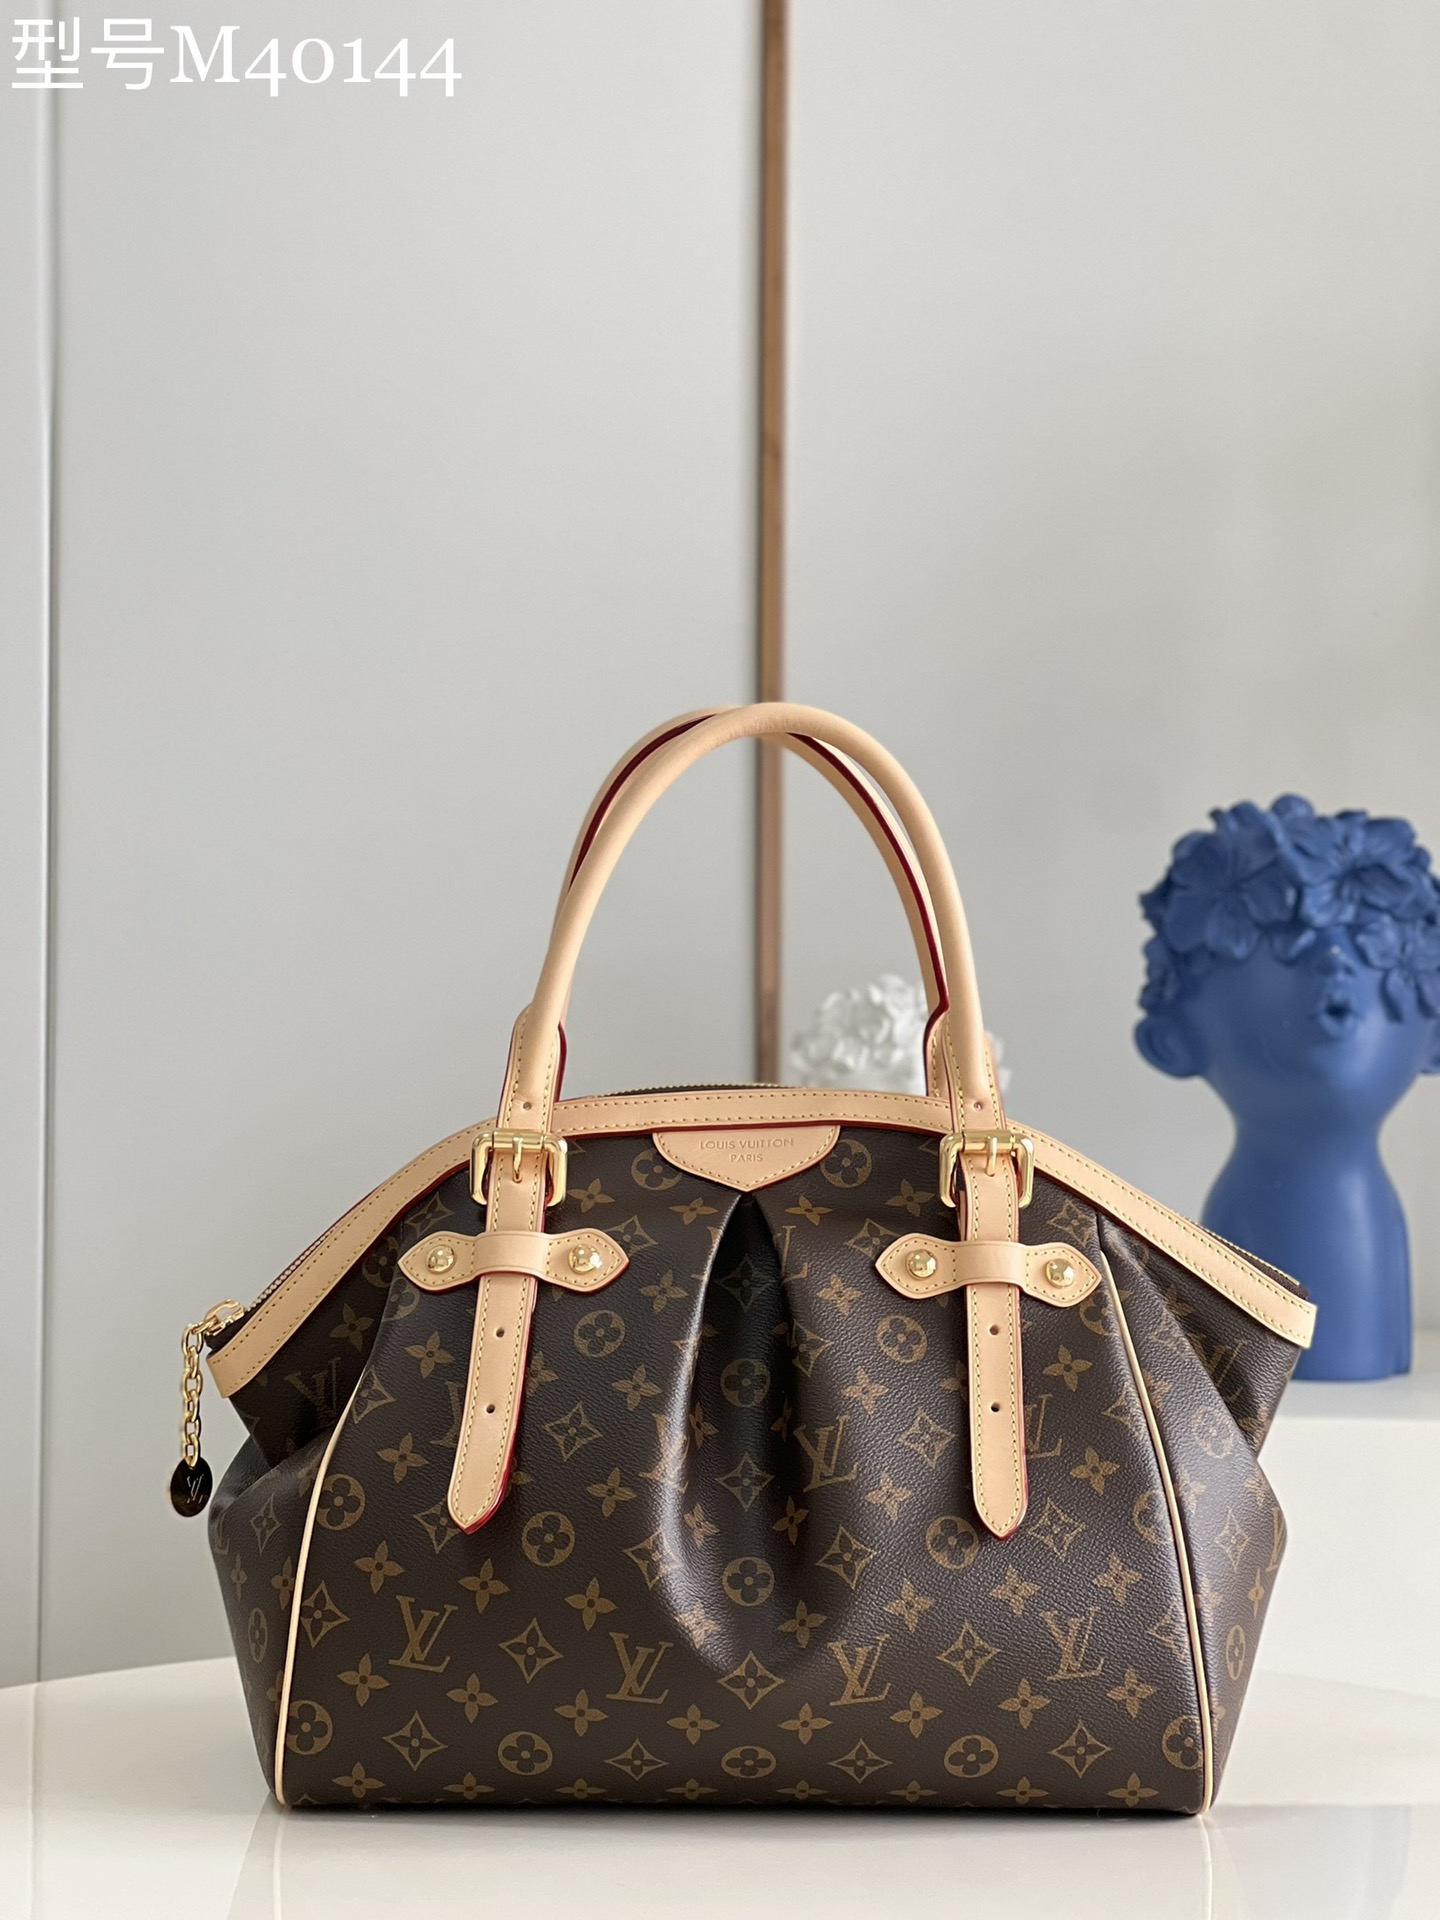 mirror copy luxury
 Louis Vuitton Bags Handbags Monogram Canvas M40144